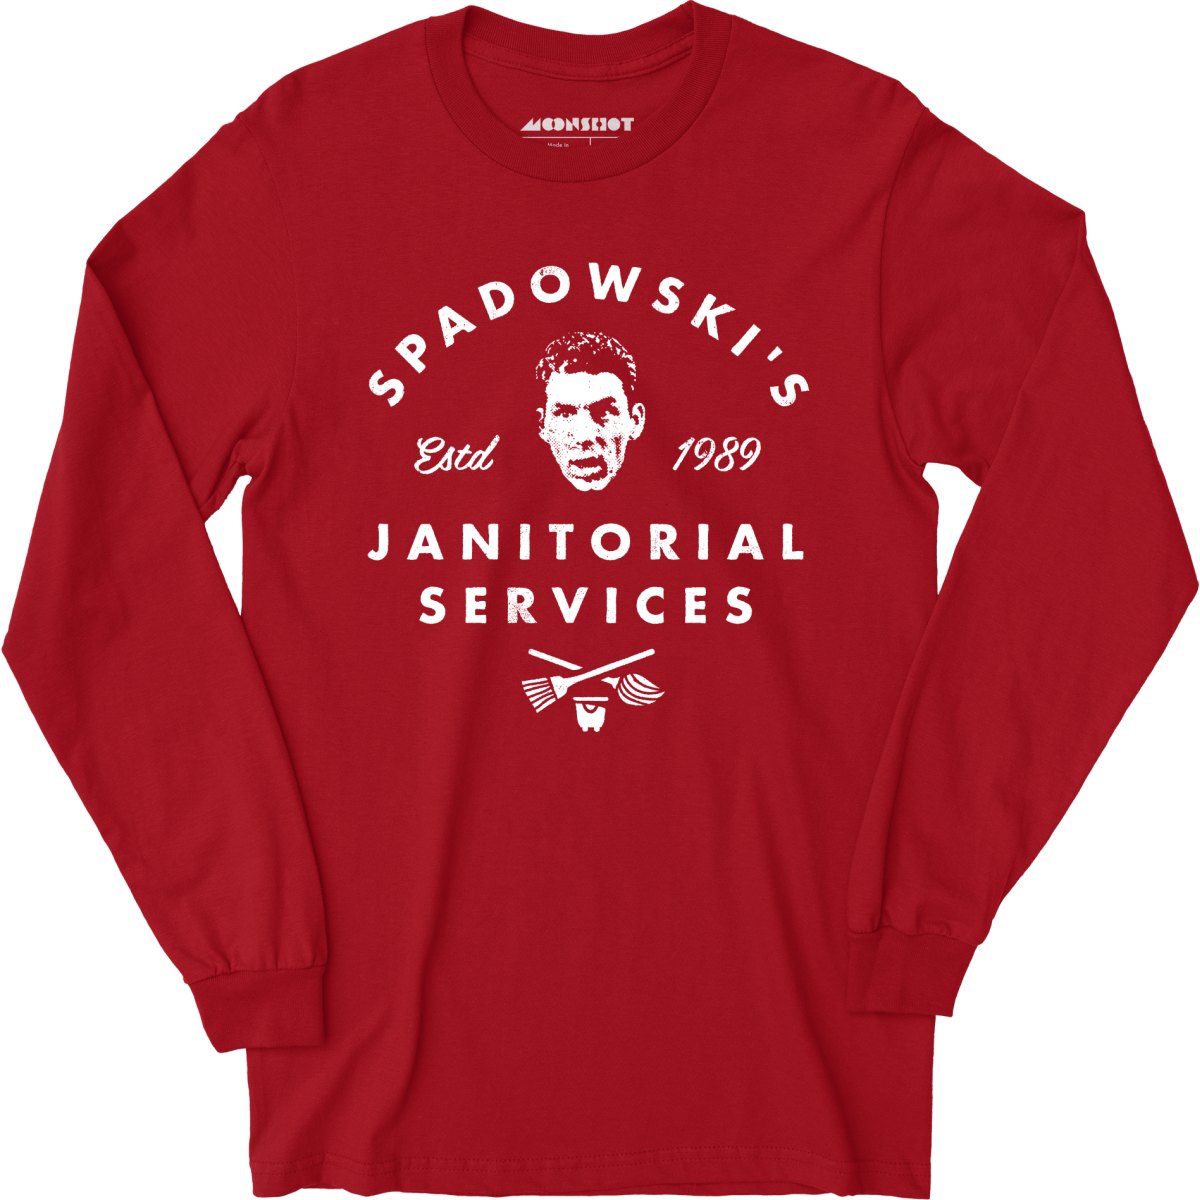 UHF Spadowski's Janitorial Services - Long Sleeve T-Shirt